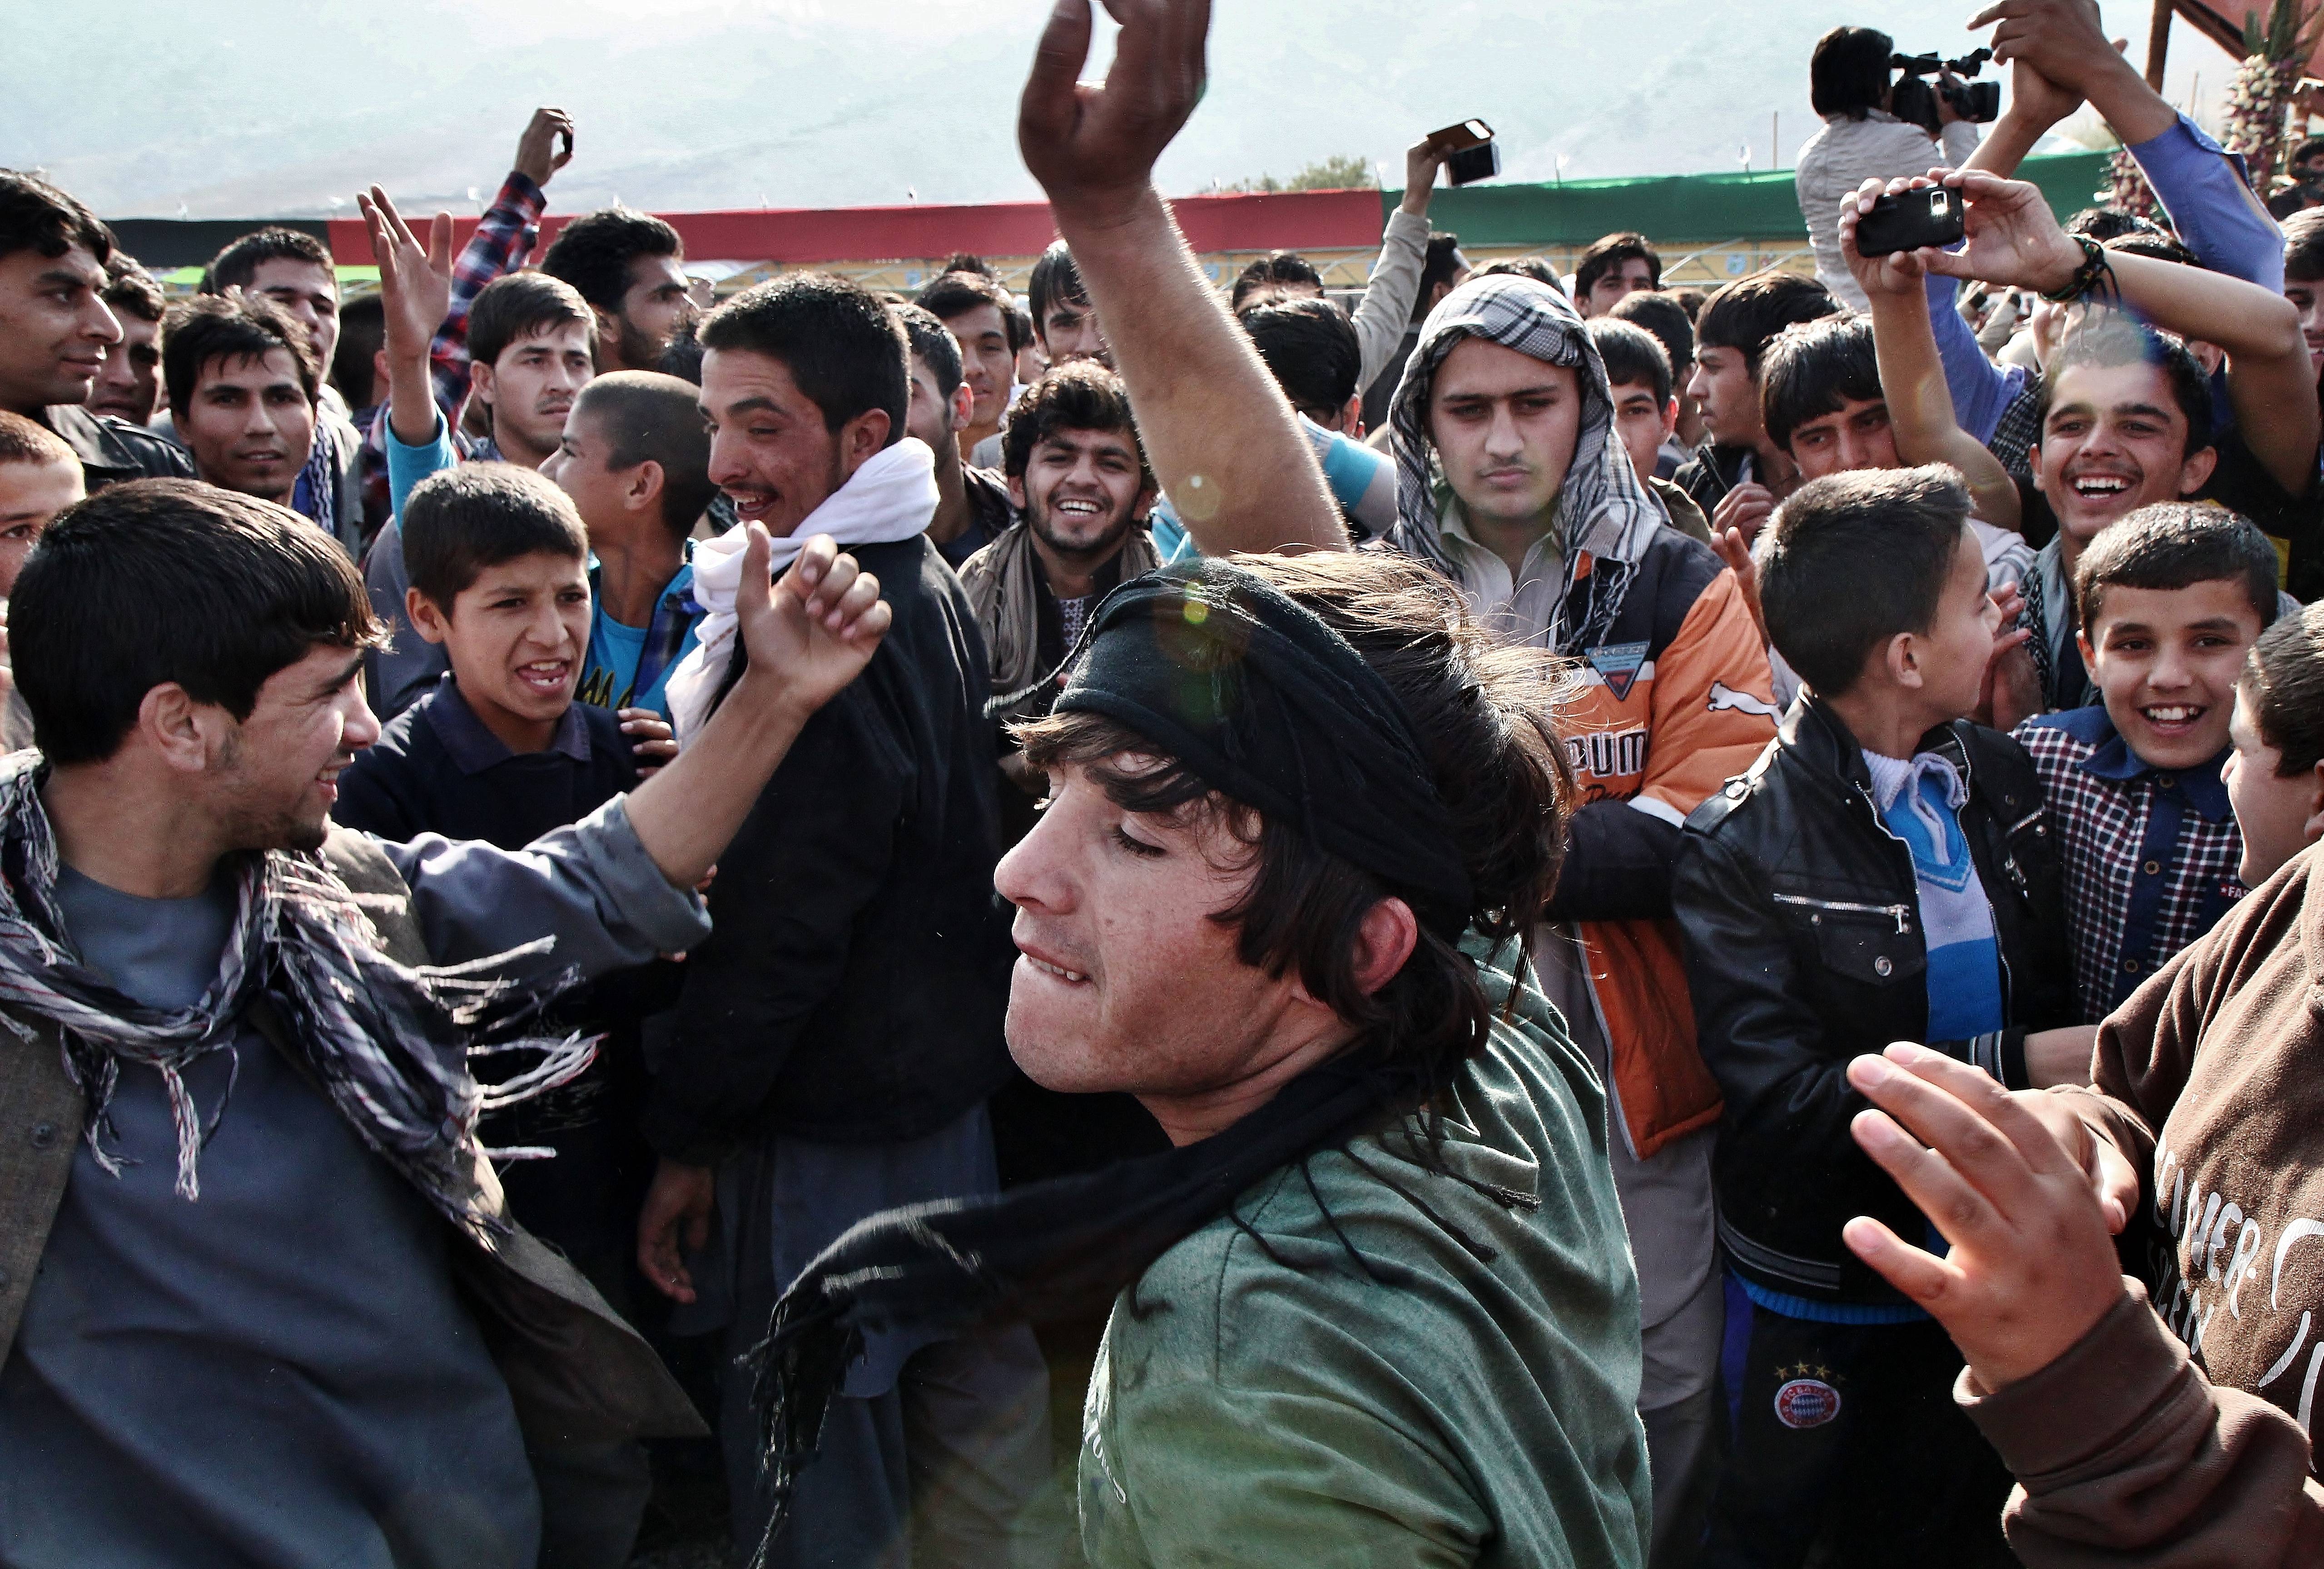 Young men at a hip-hop concert in Kabul (photo: Ronja von Wurmb-Seibel)